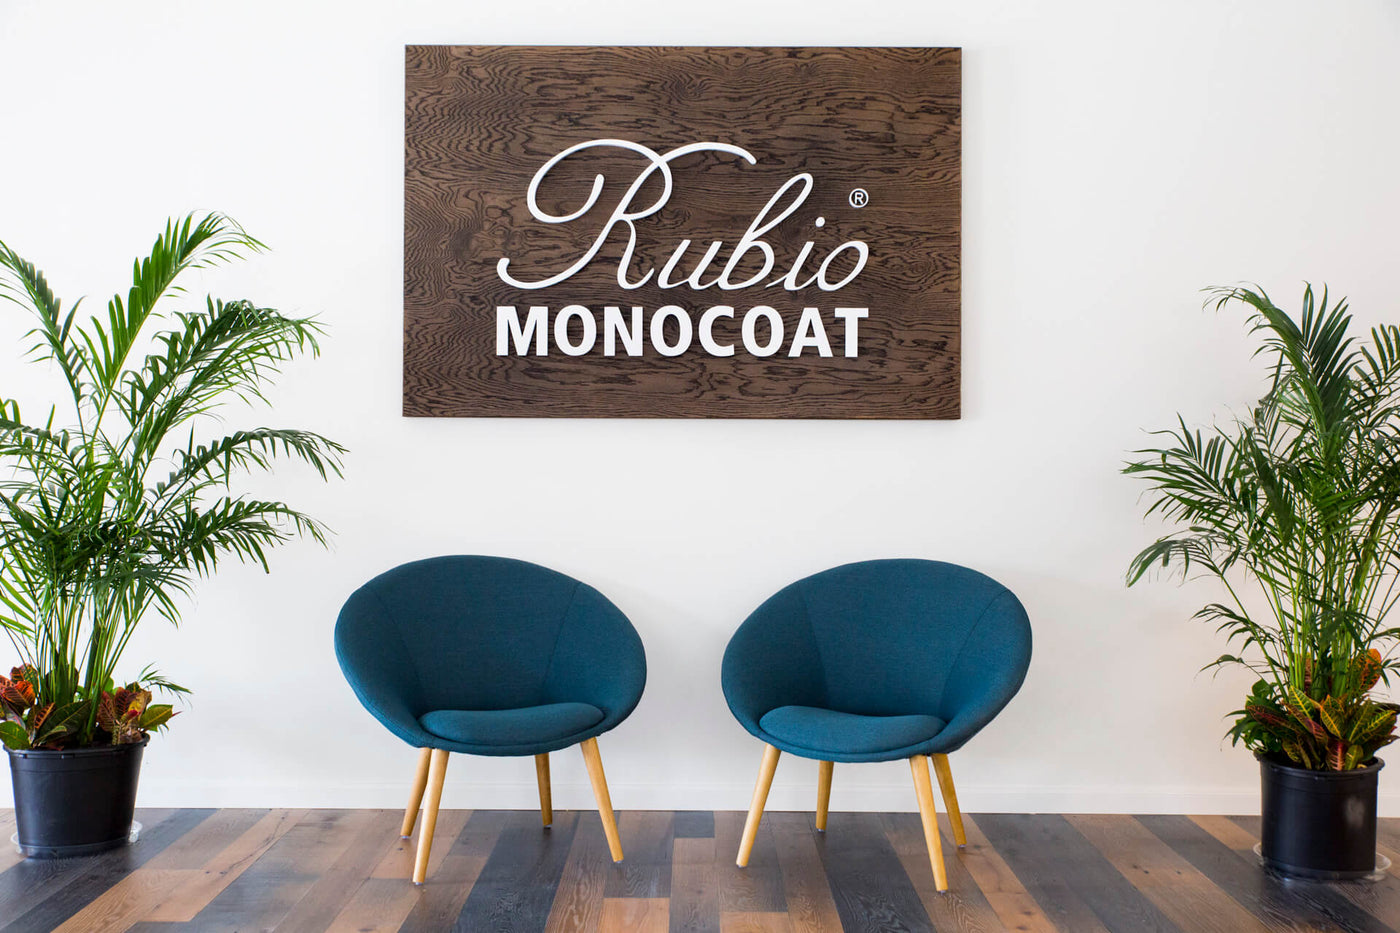 Rubio Monocoat USA headquarters